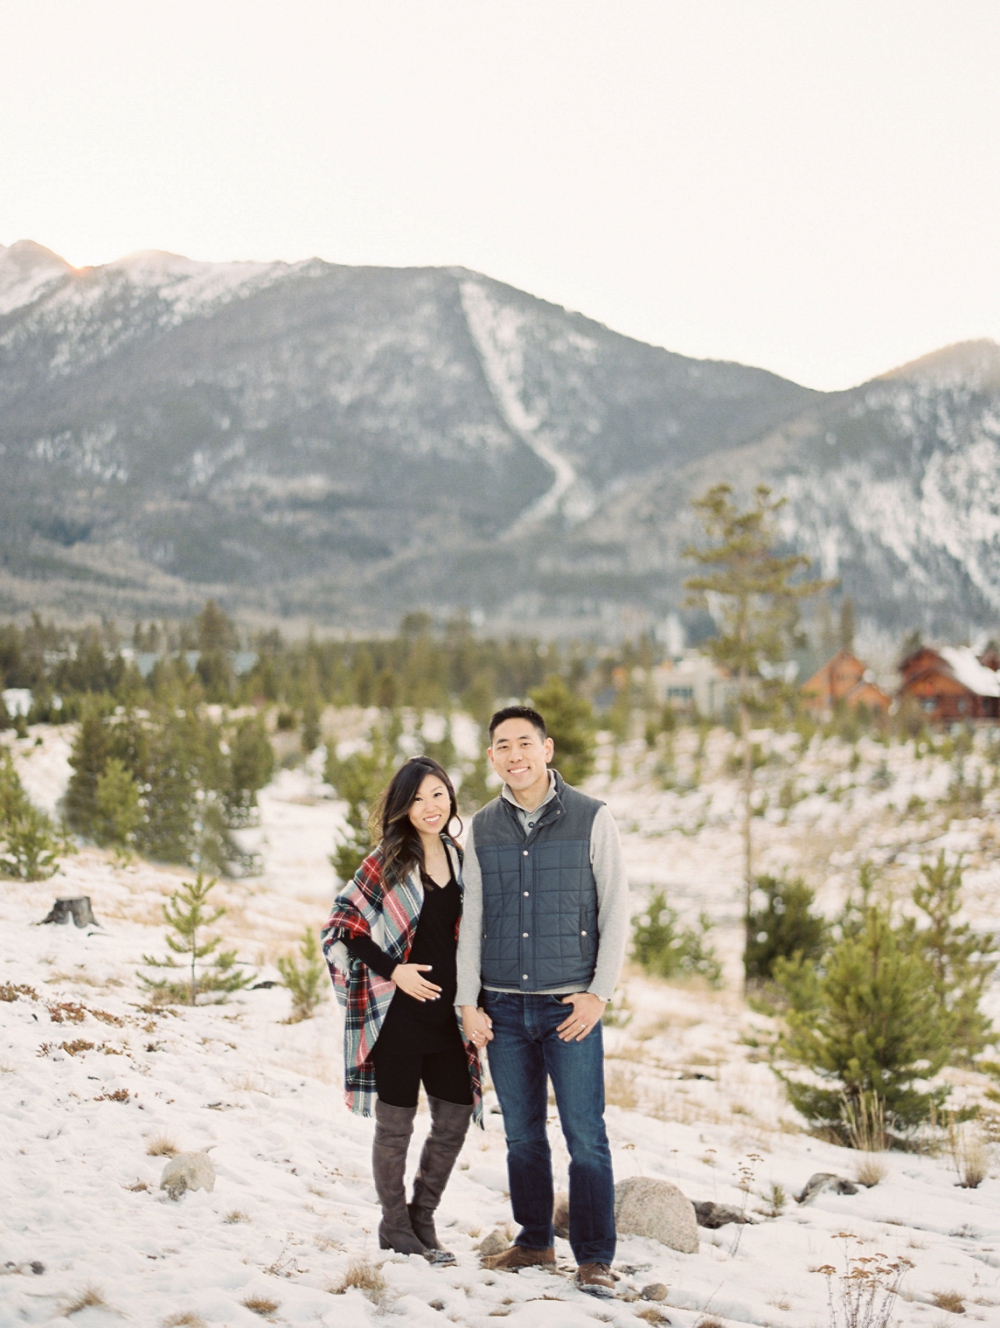 Dani-Cowan-Photography-Snowy-Colorado-Mountain-Maternity-Photoshoot12_WEB